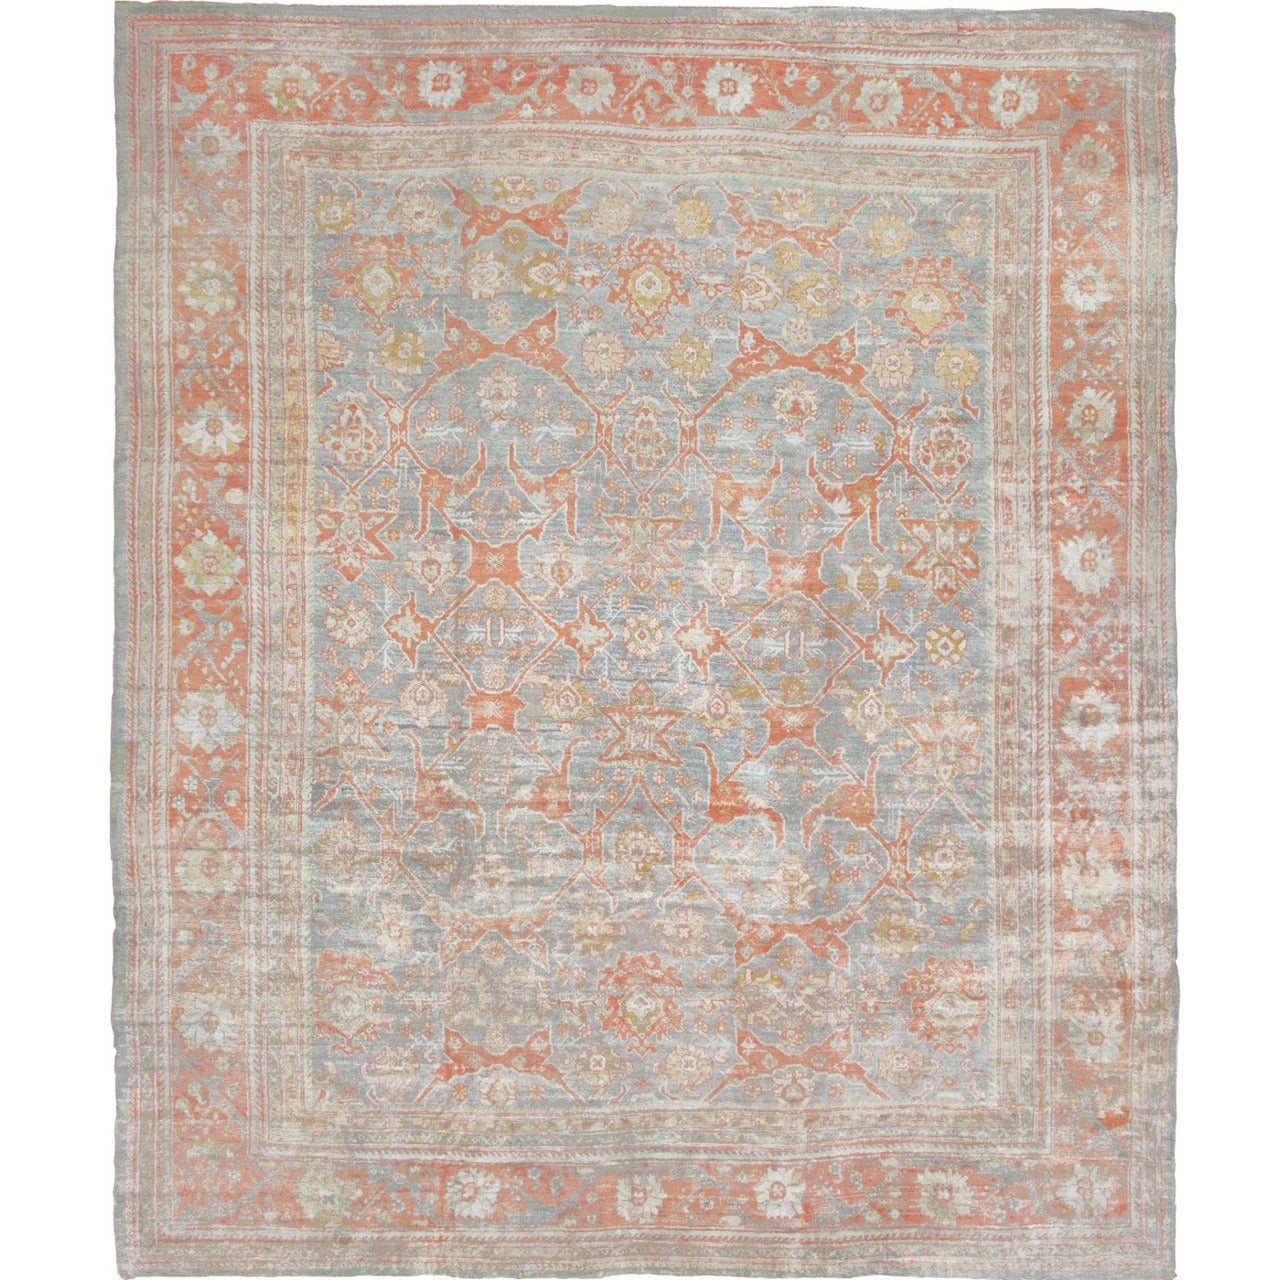 Antique Angora Oushak Rug or Carpet from Turkey